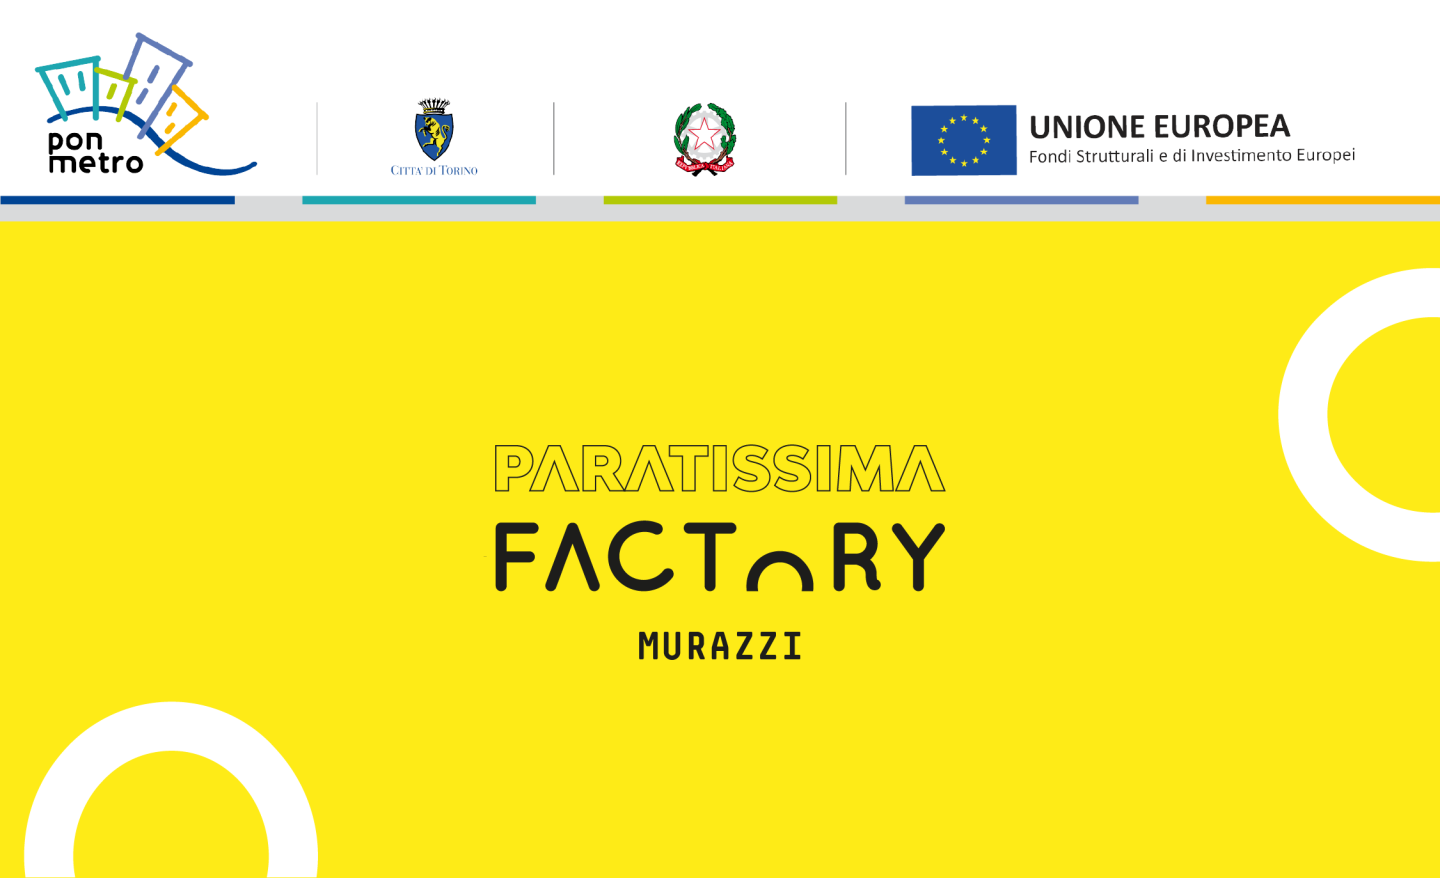 Paratissima Factory murazzi_